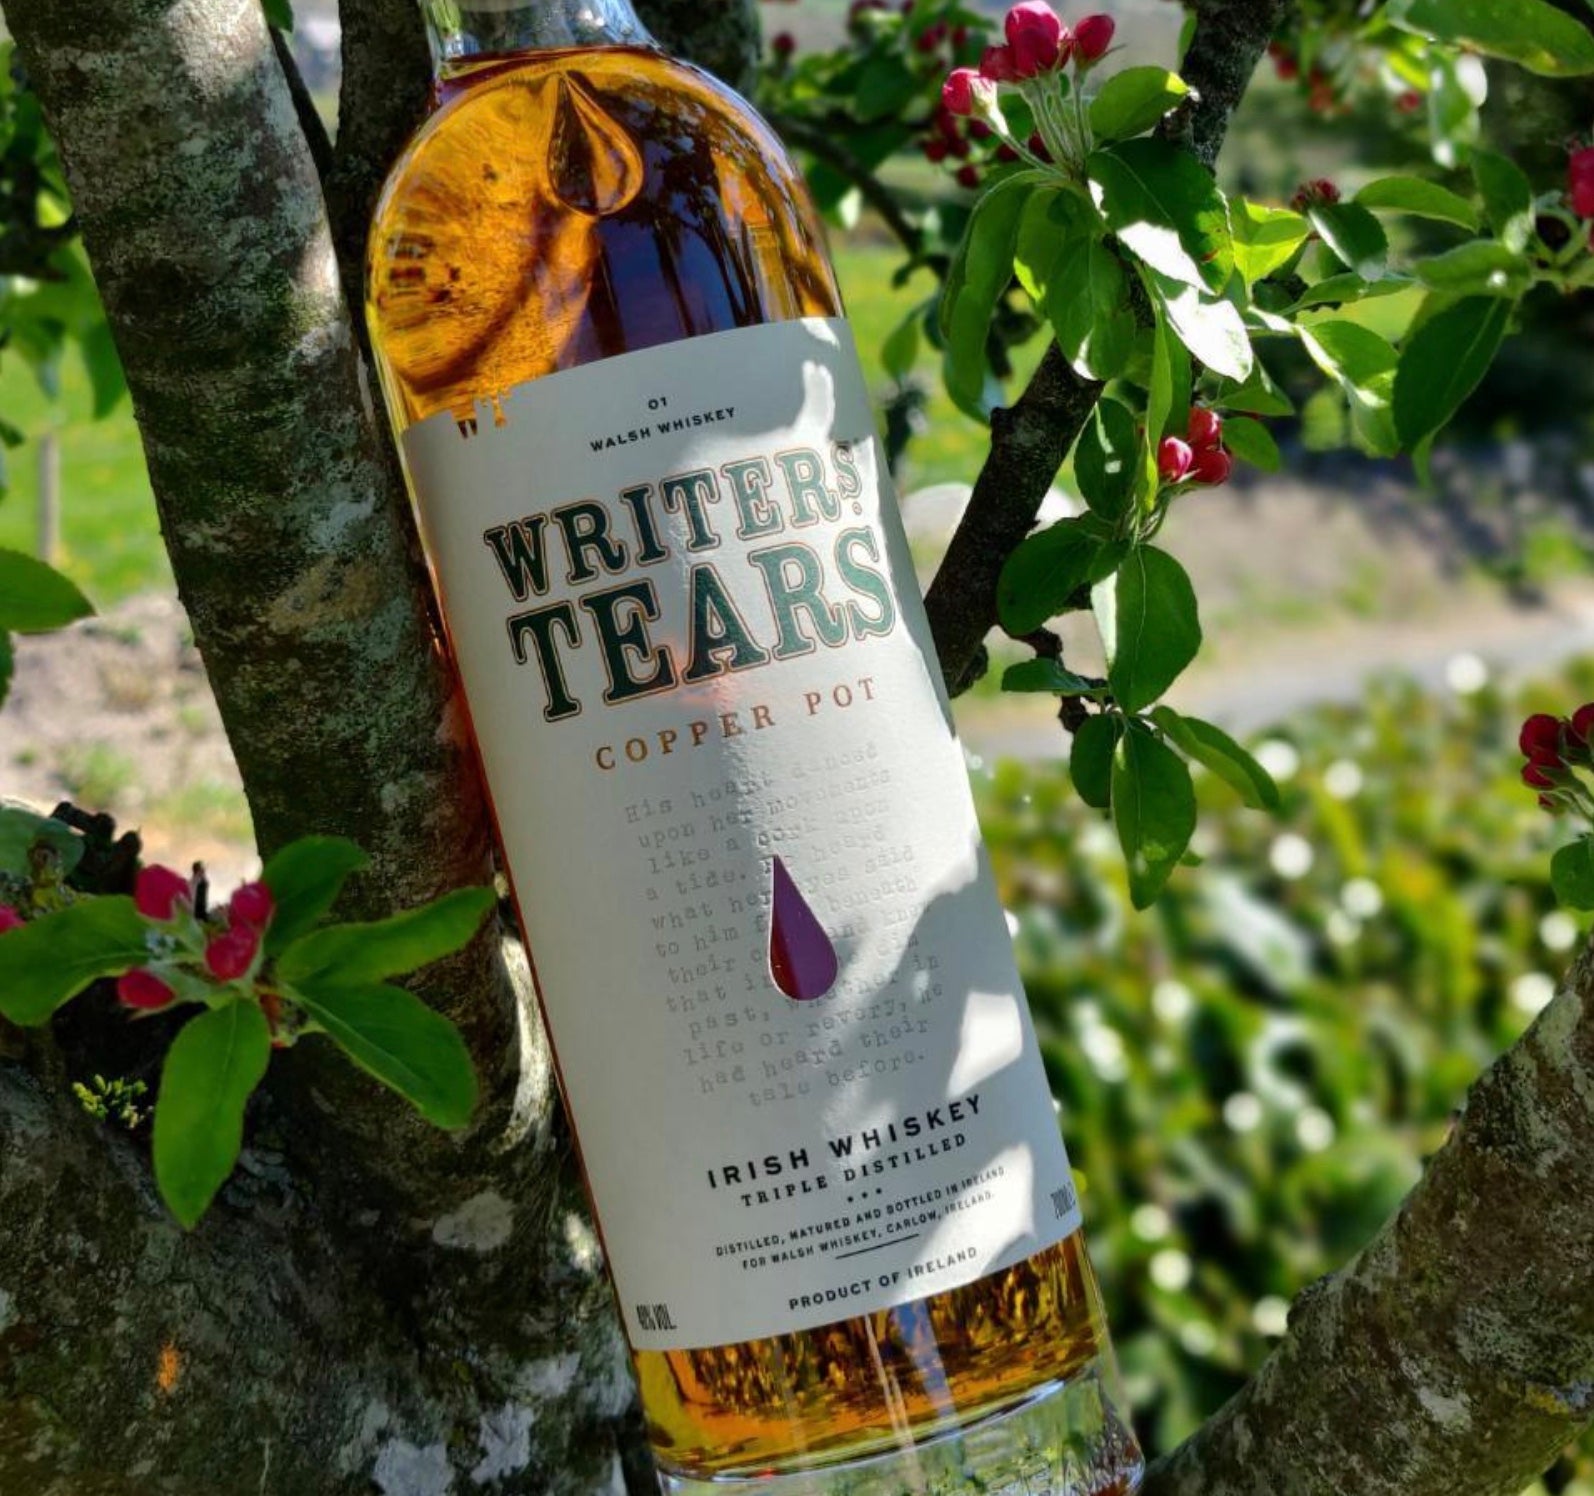 Writers' Tears Copper Pot Irish Whiskey 750ml